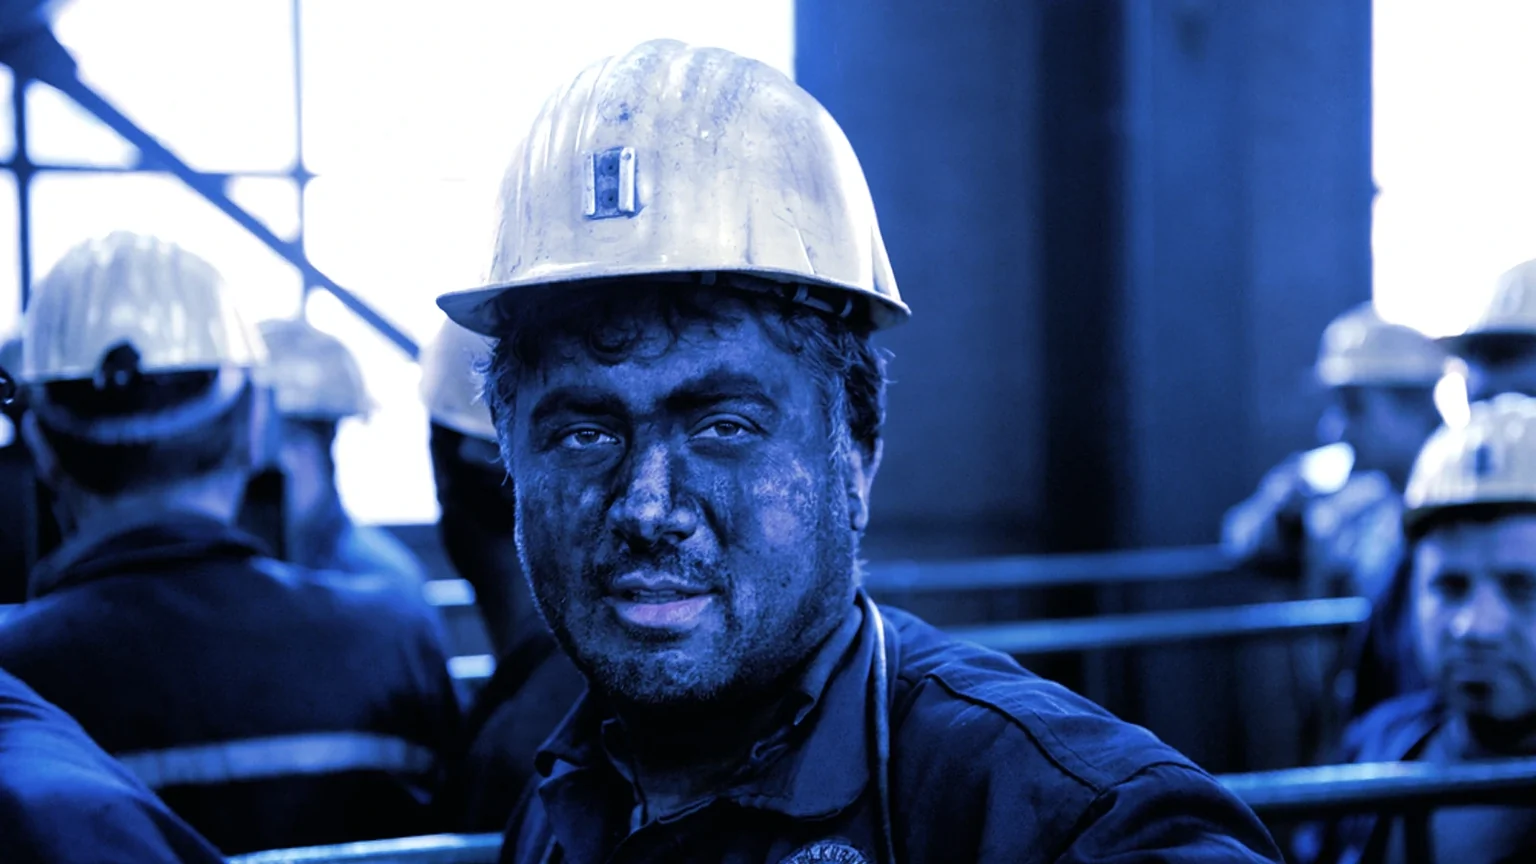 Mining, dirtier than it looks. PHOTOCREDIT: Shutterstock